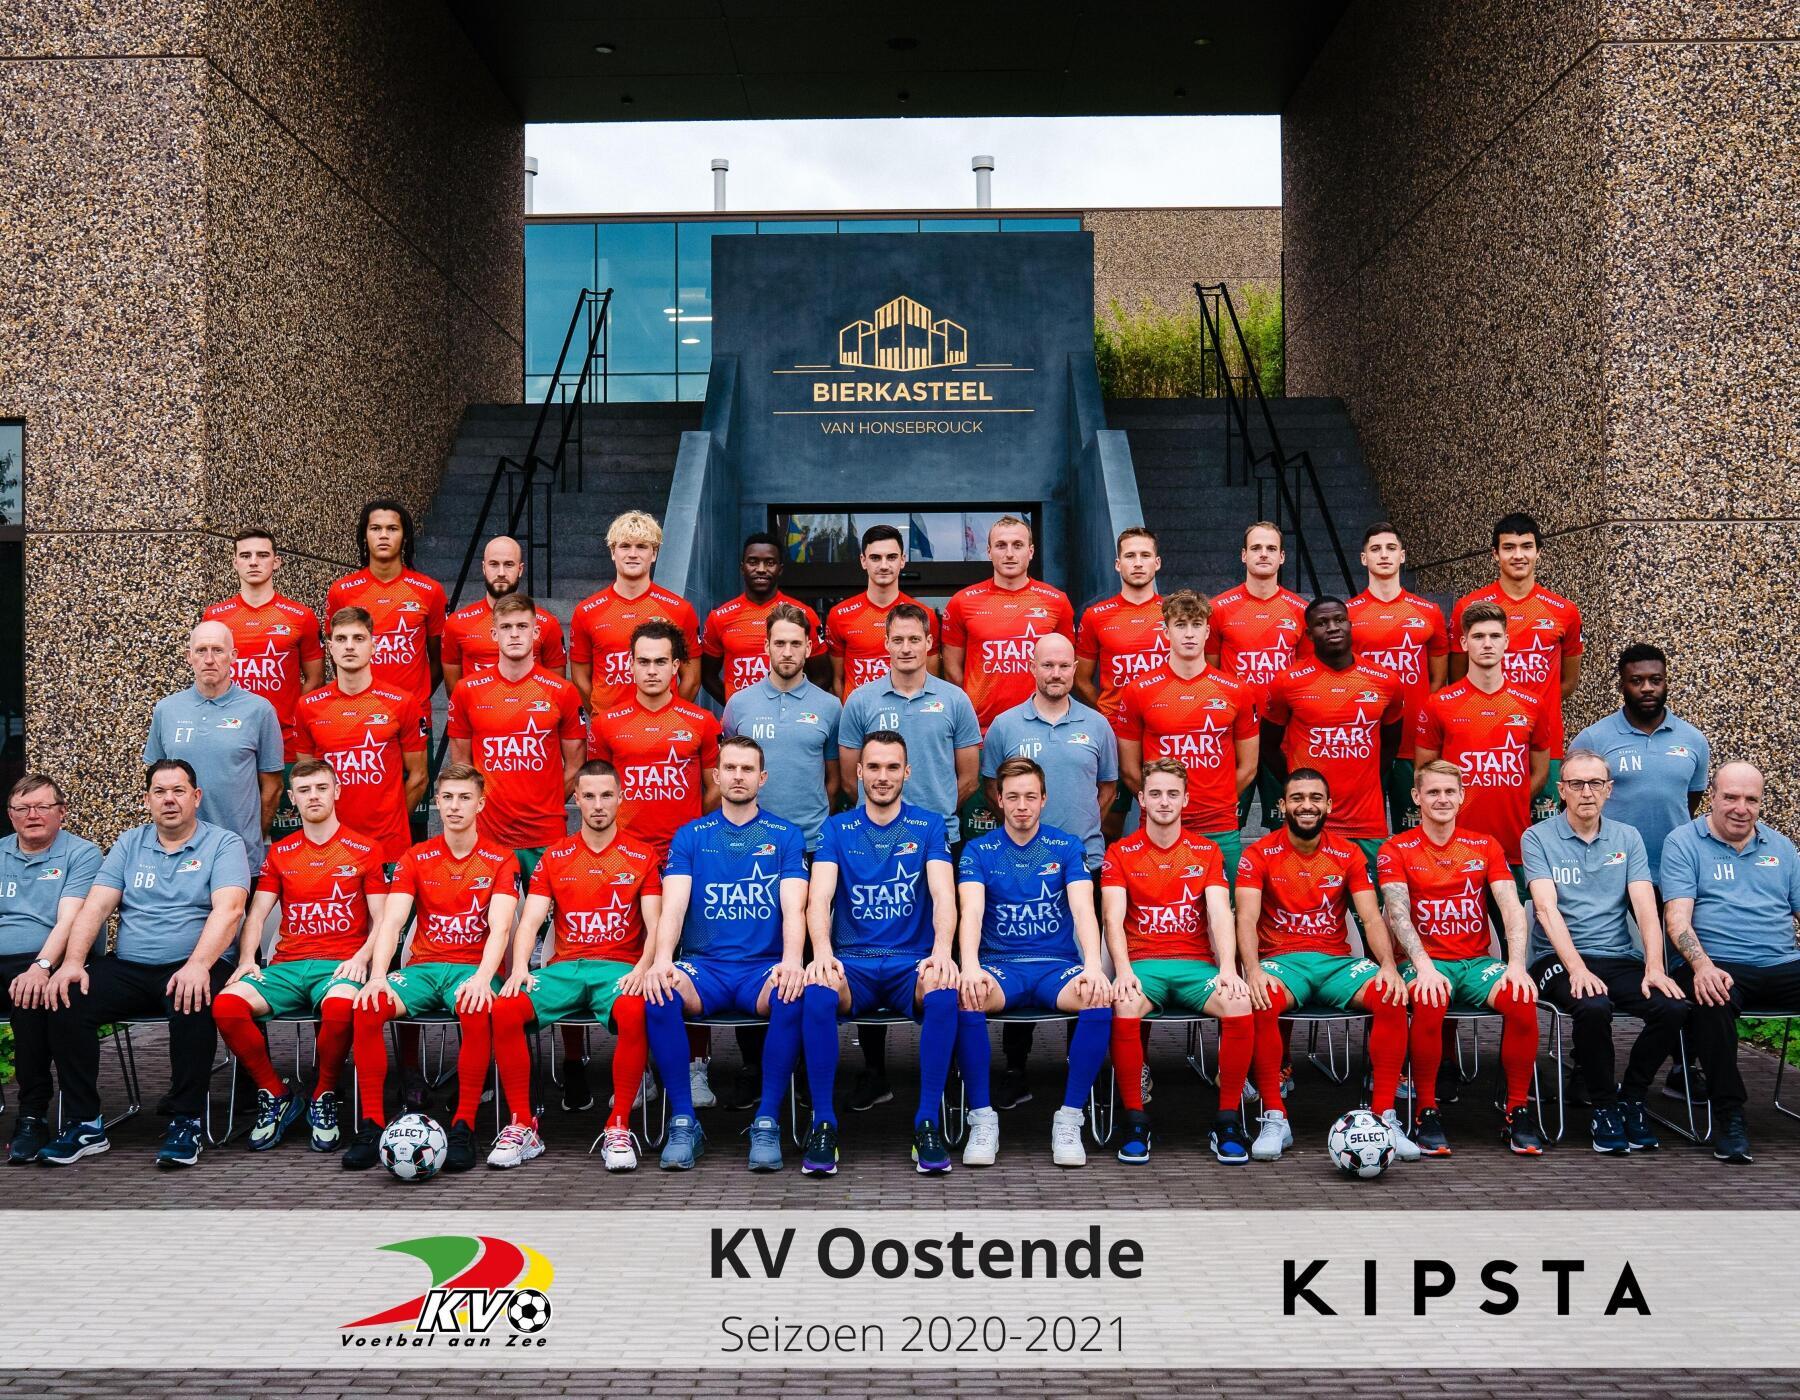 KIPSTA partenaire du Club KV Ostende